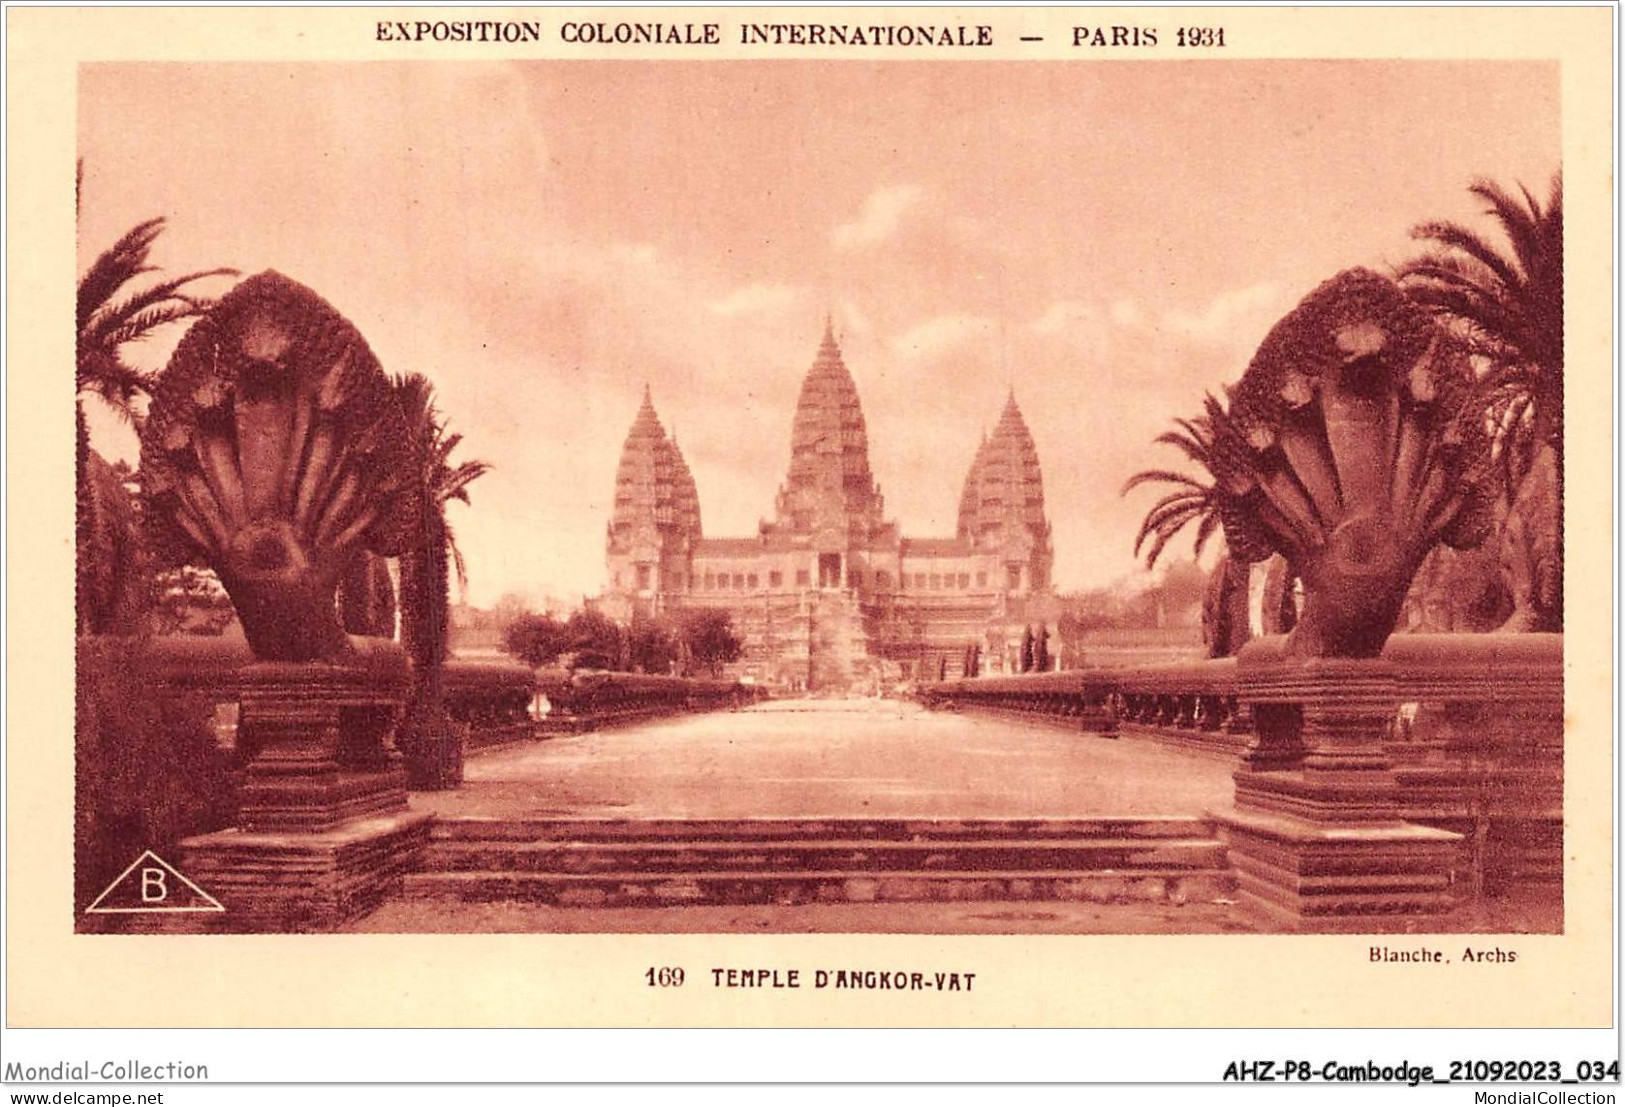 AHZP8-CAMBODGE-0700 - EXPOSITION COLONIALE INTERNATIONALE - PARIS 1931 - TEMPLE D'ANGKOR-VAT - Cambodia